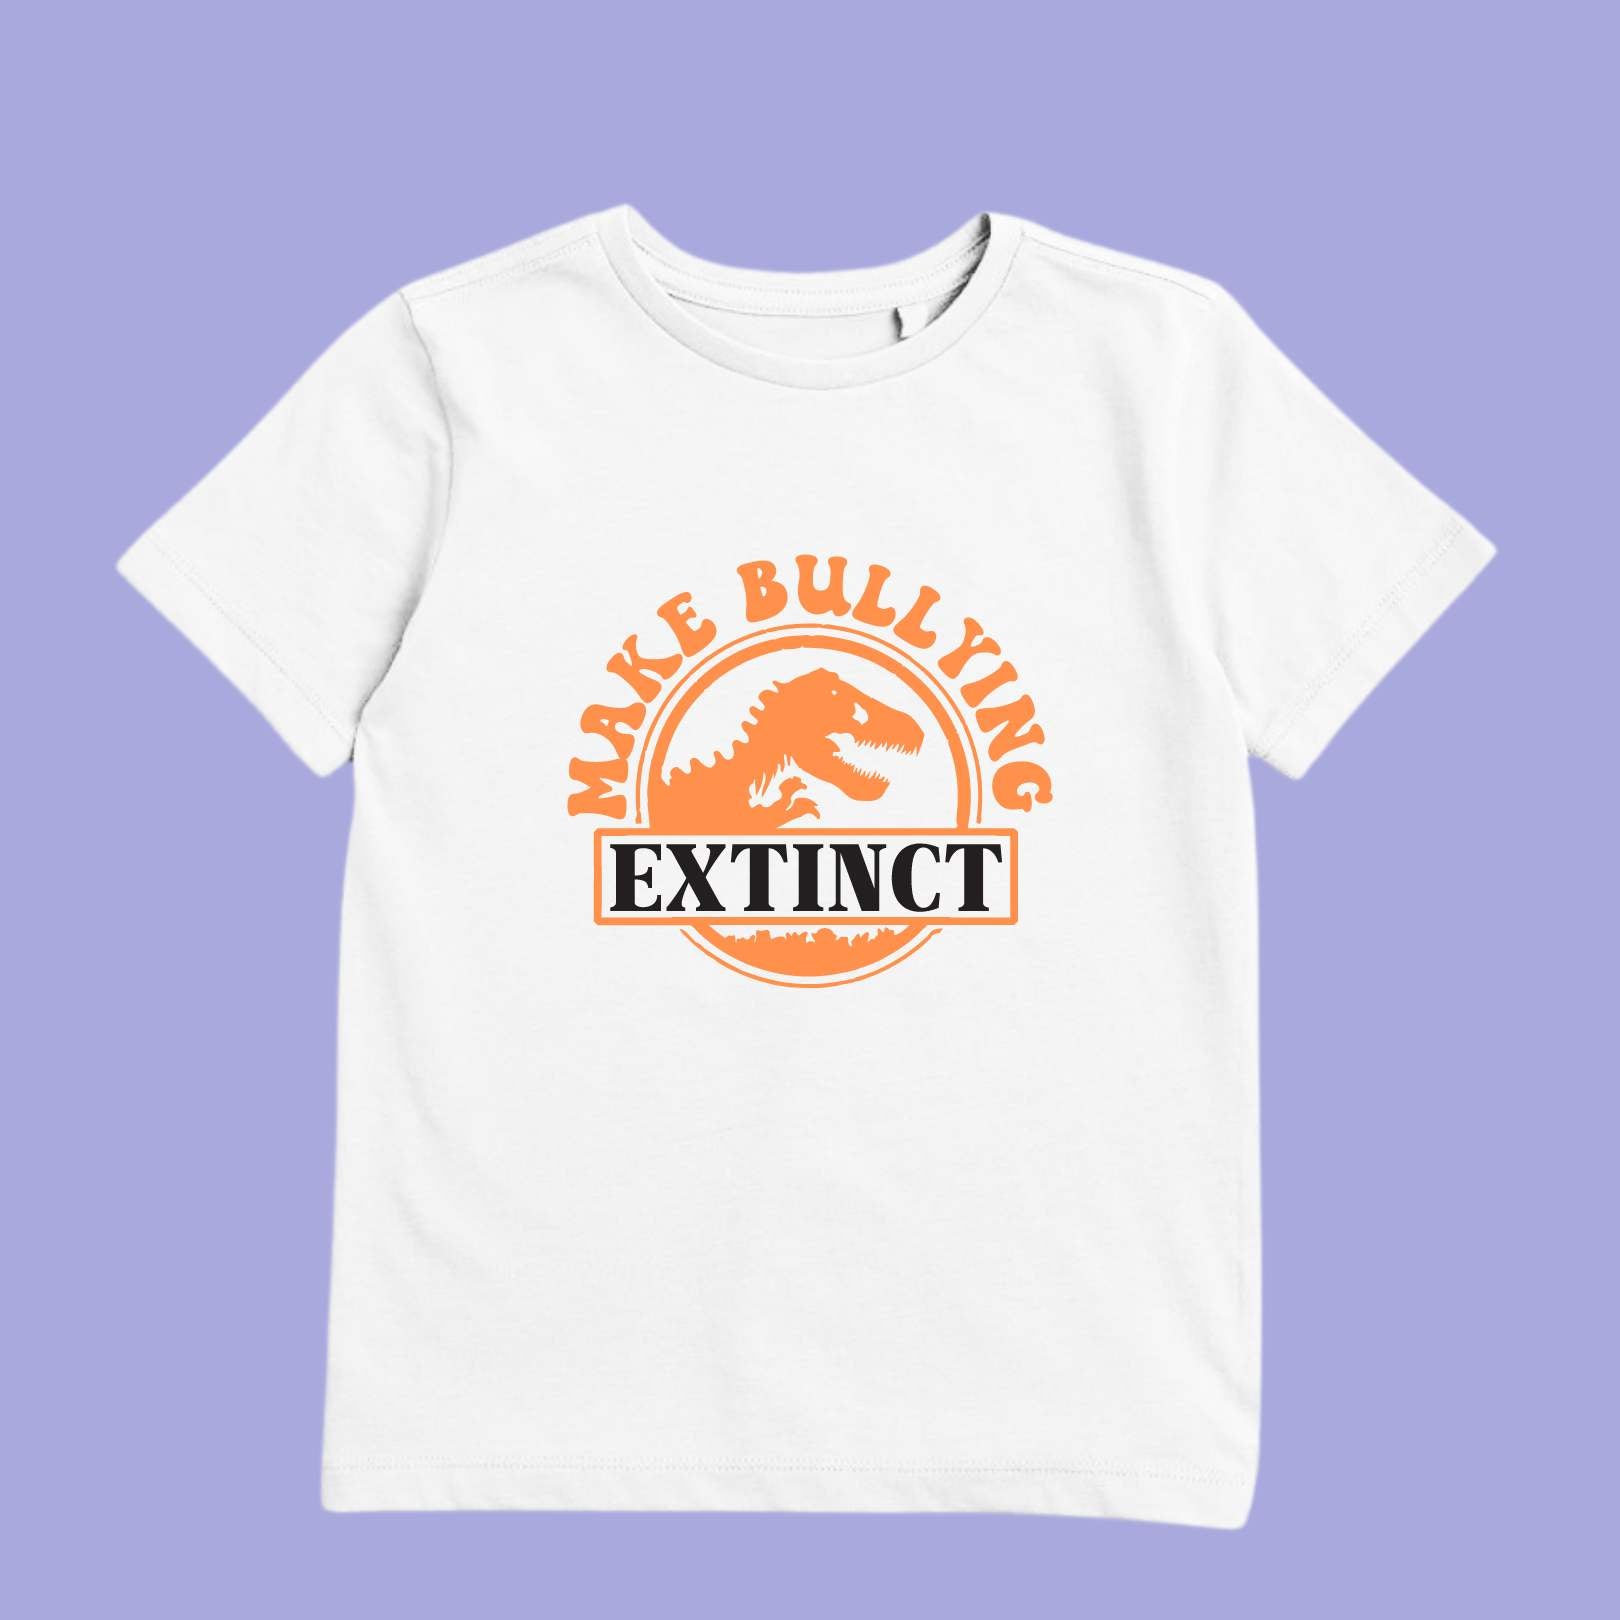 jurassic park style tshirt. kids bullying. harmony day. orange shirt. make bullying extinct